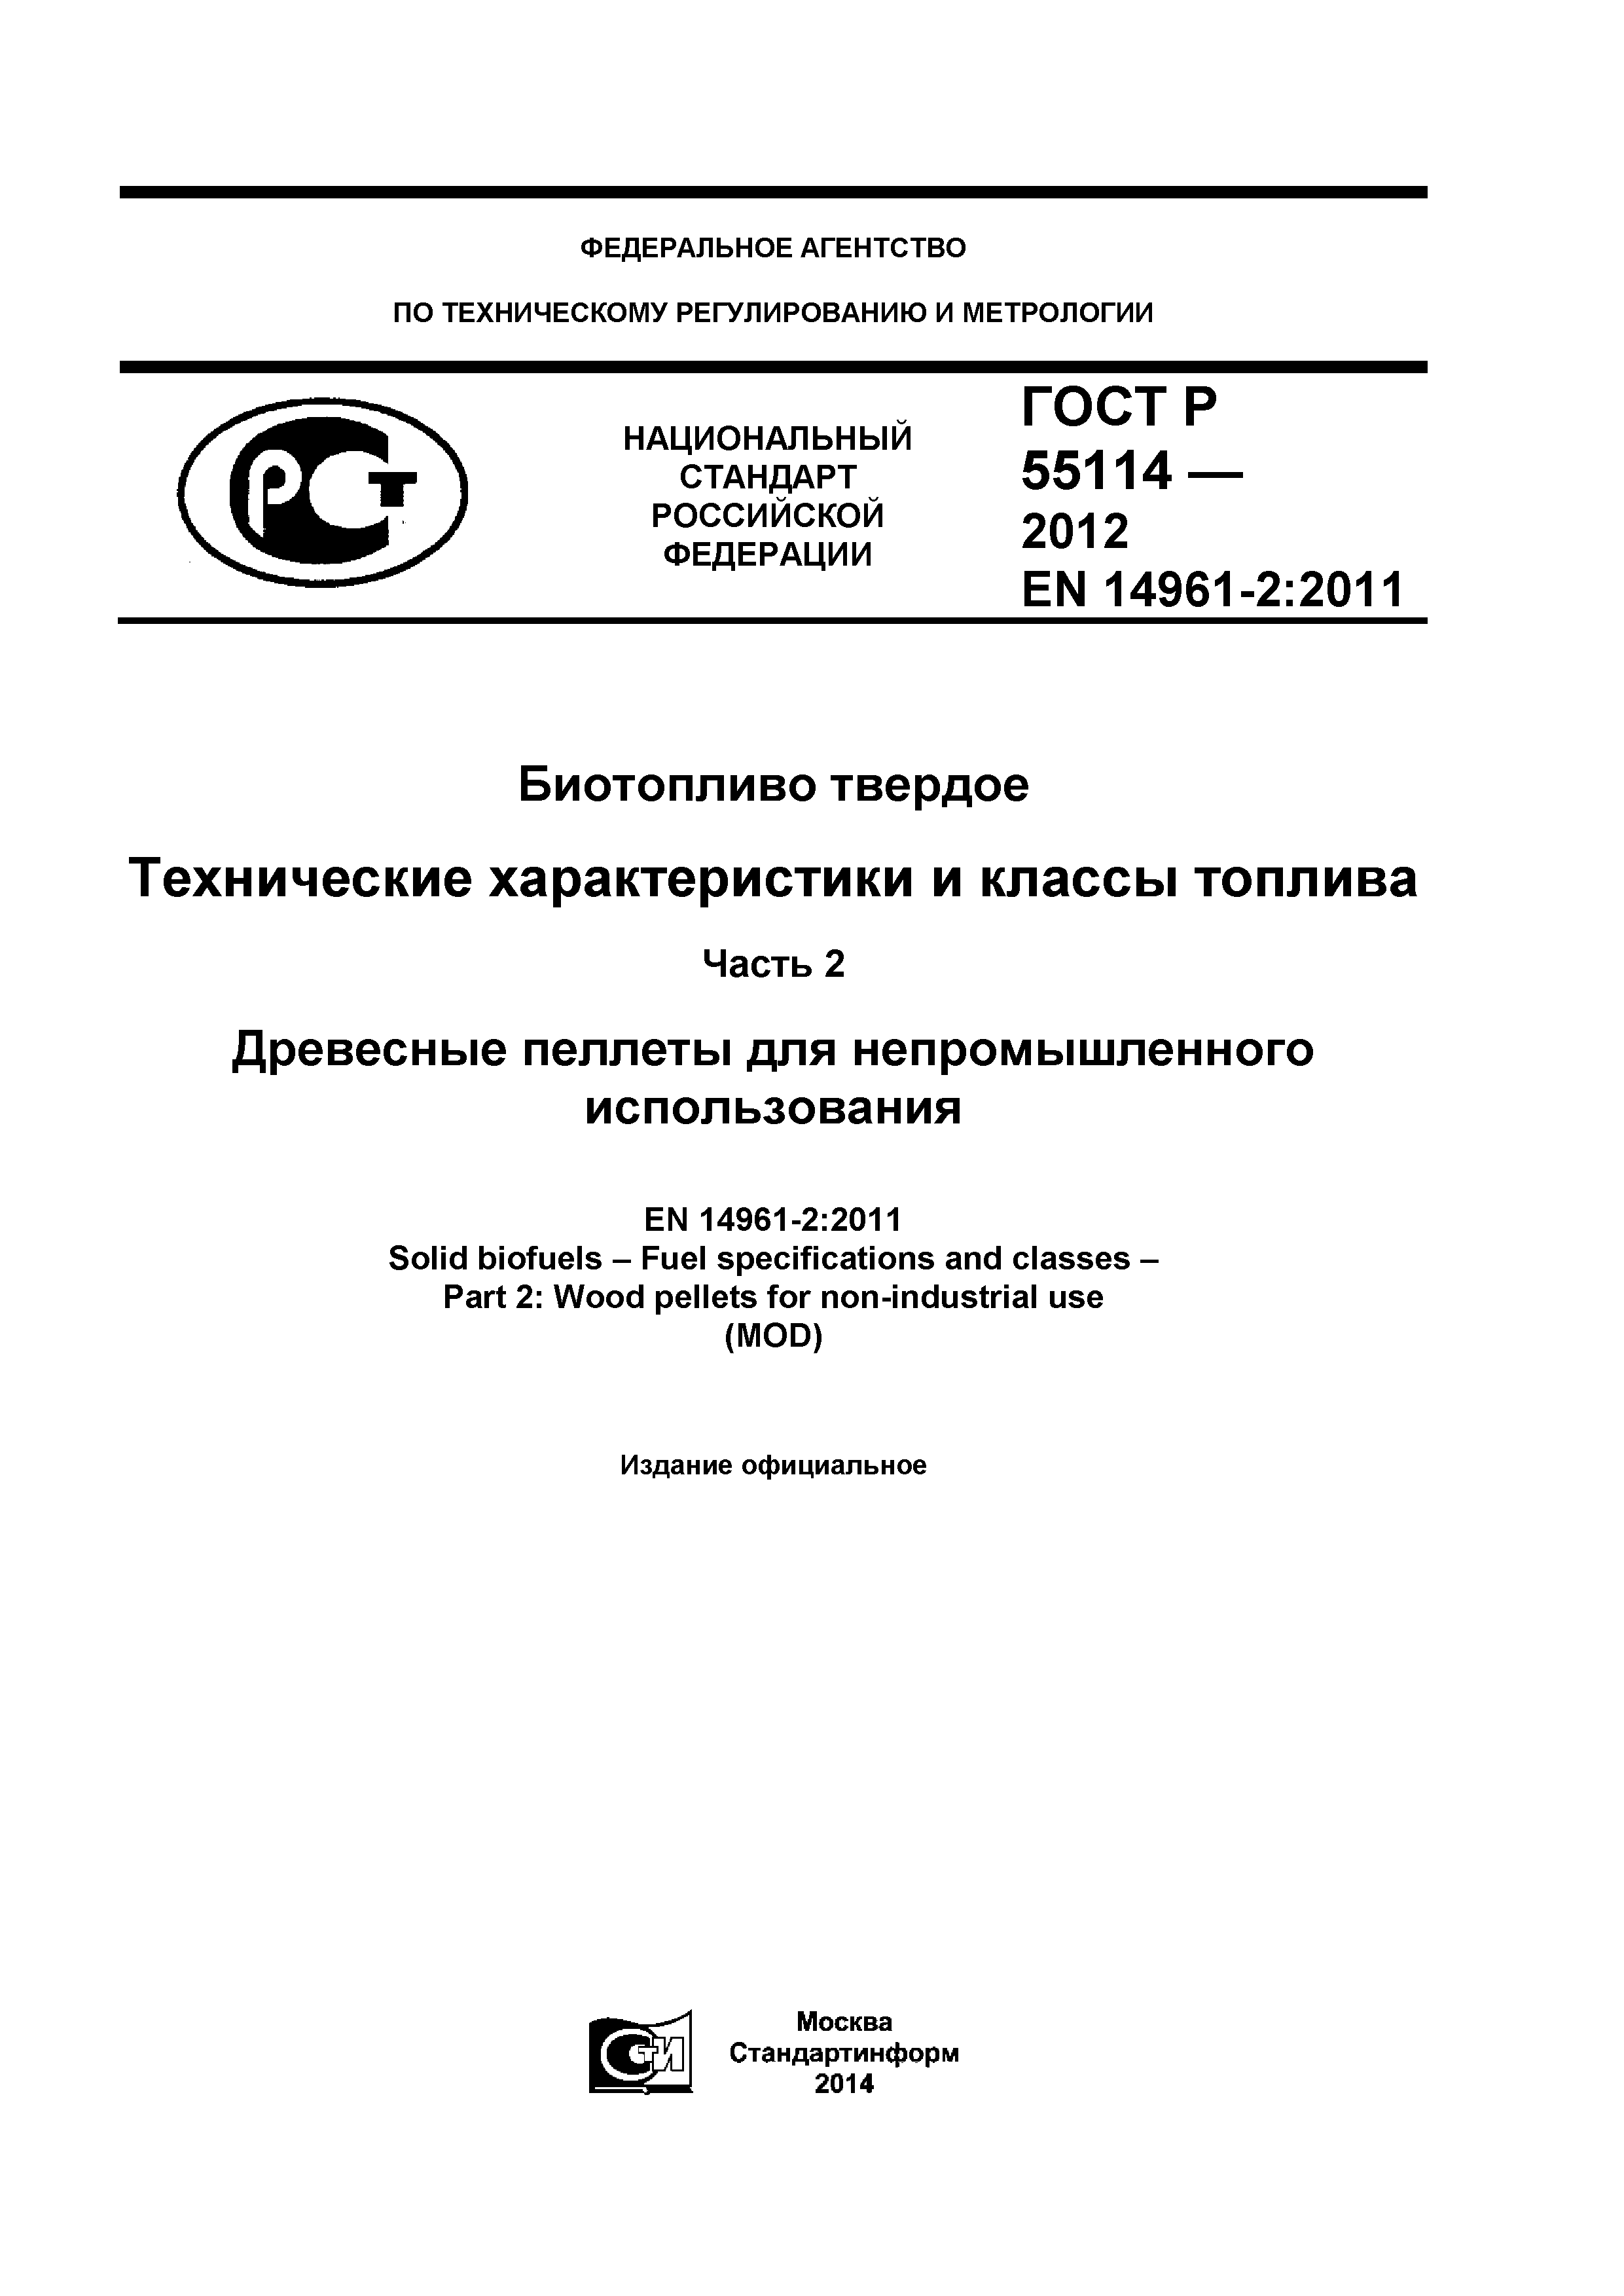 ГОСТ Р 55114-2012